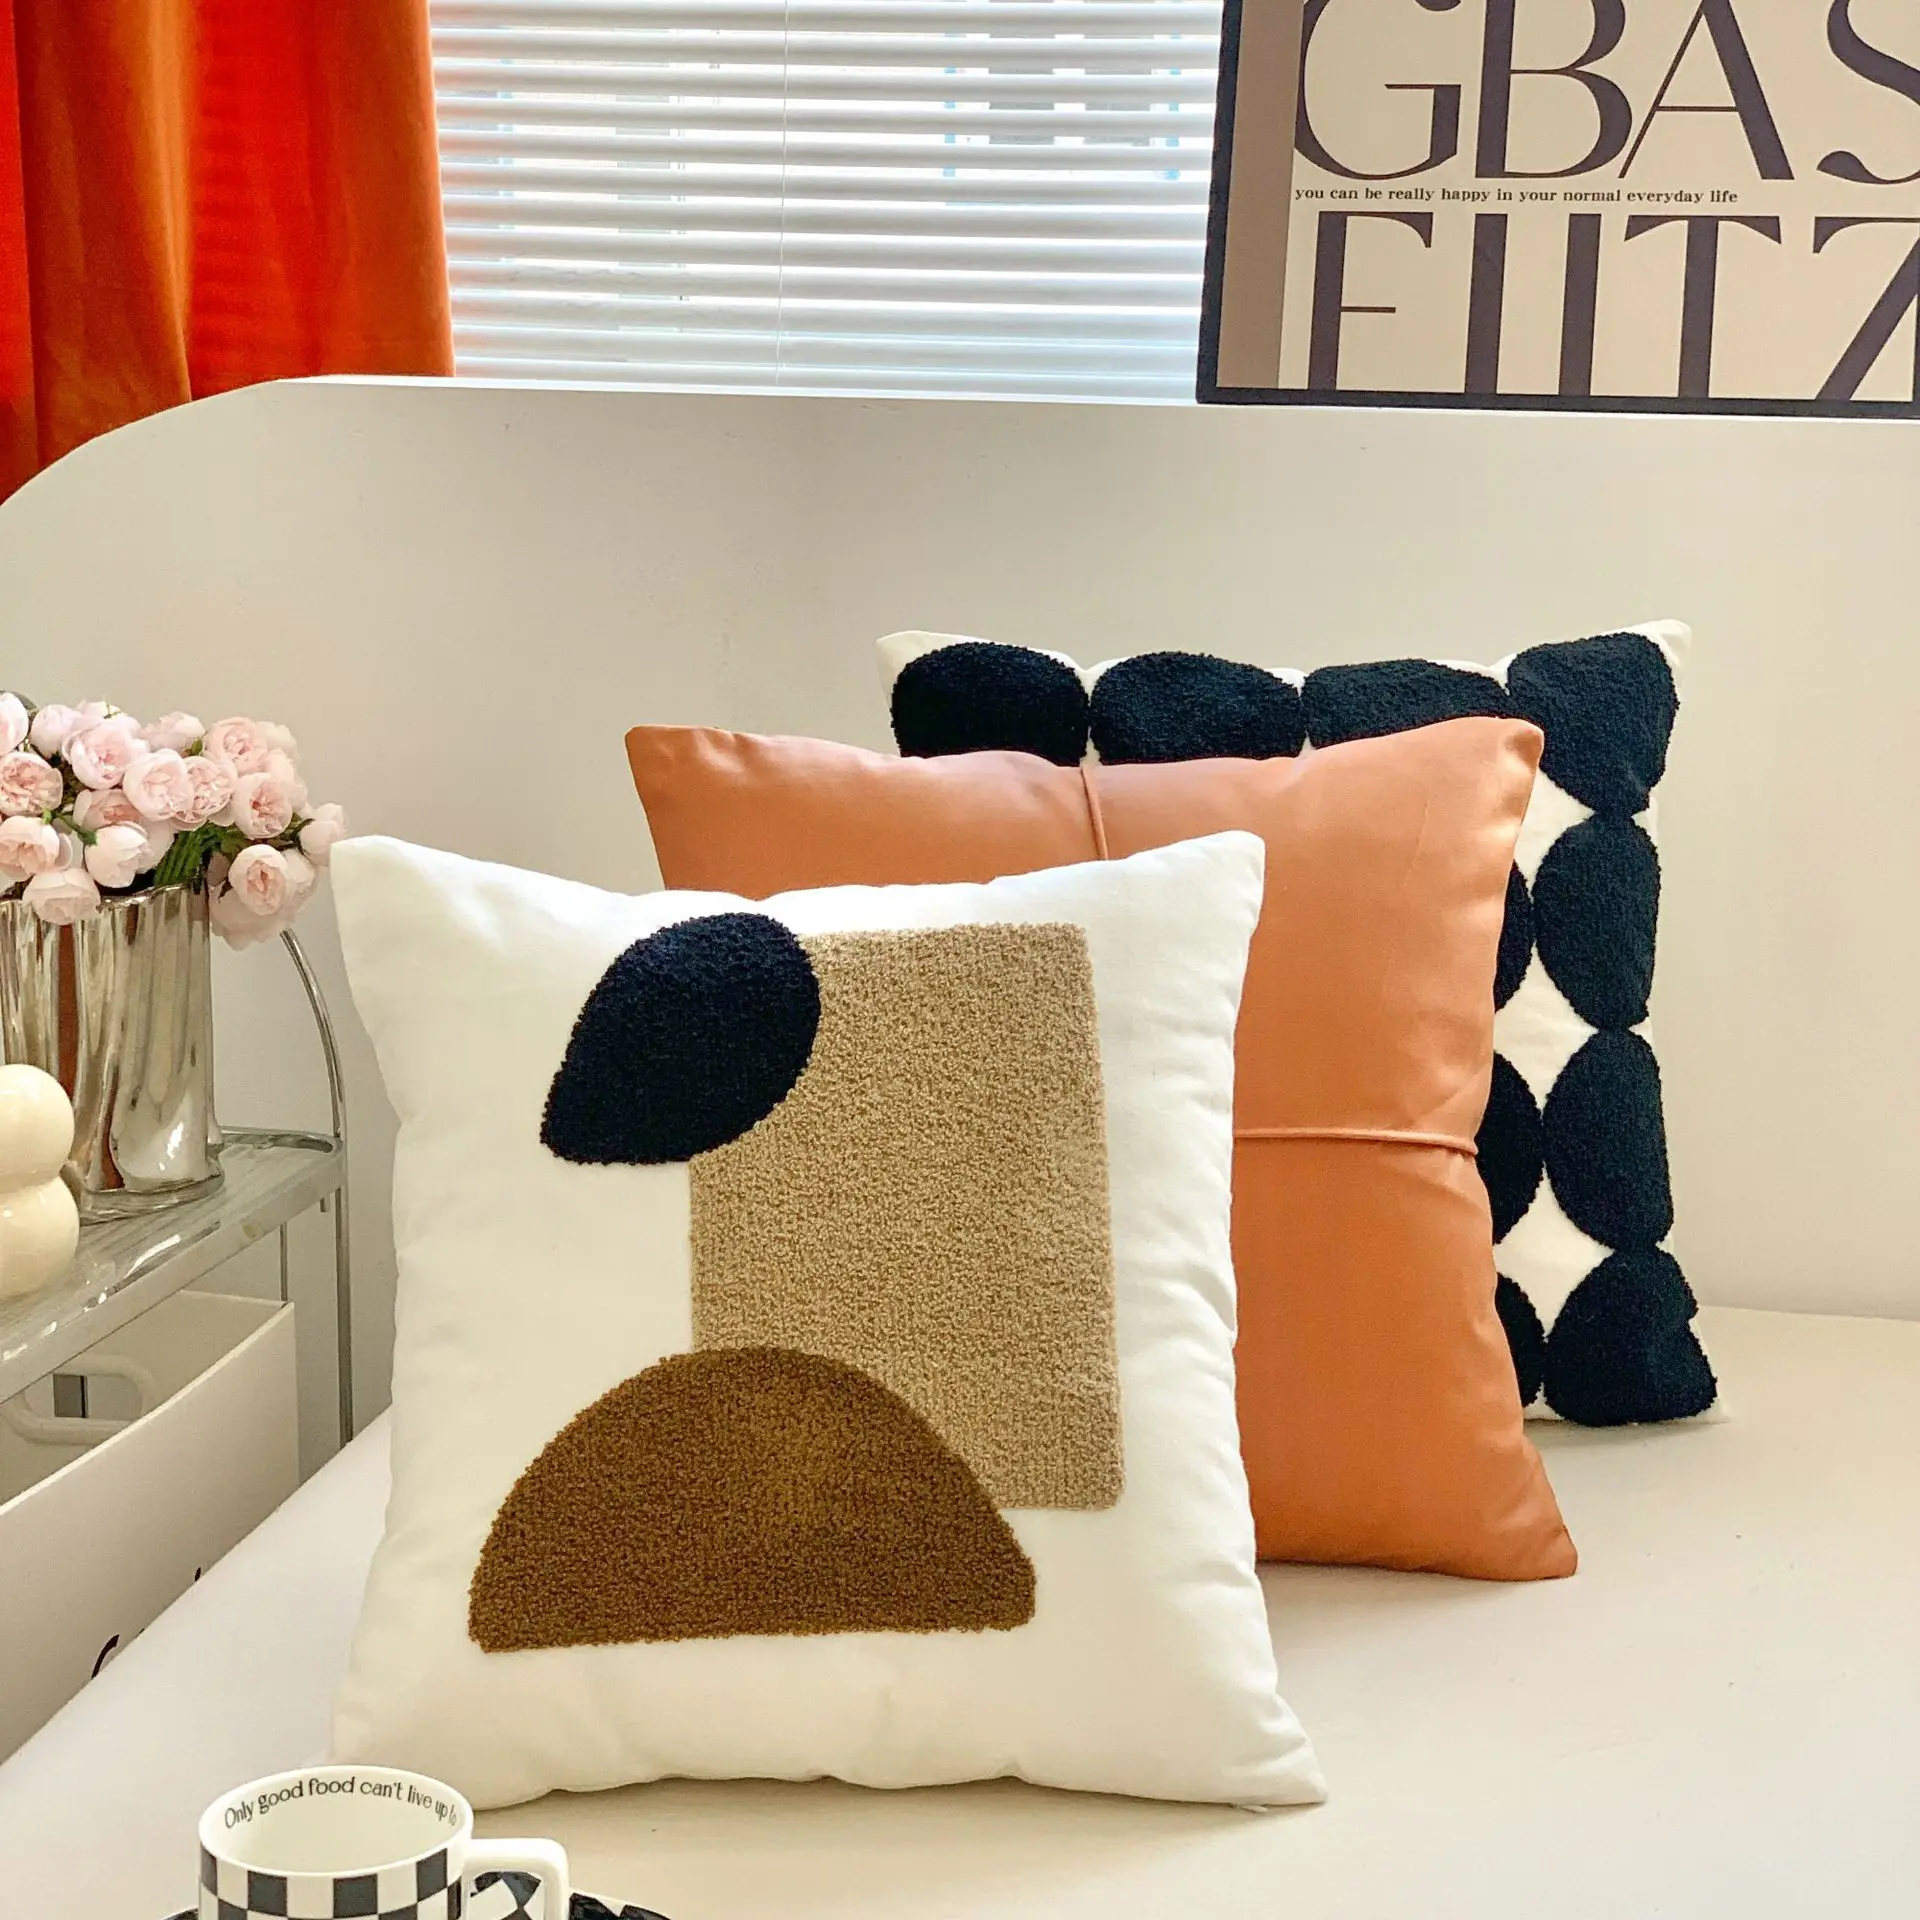 

Simple Nordic Black White Pillowcase Literary Cream Style Home Decor Throw Pillows Cover Living Room Sofa Chair Cushion Cover